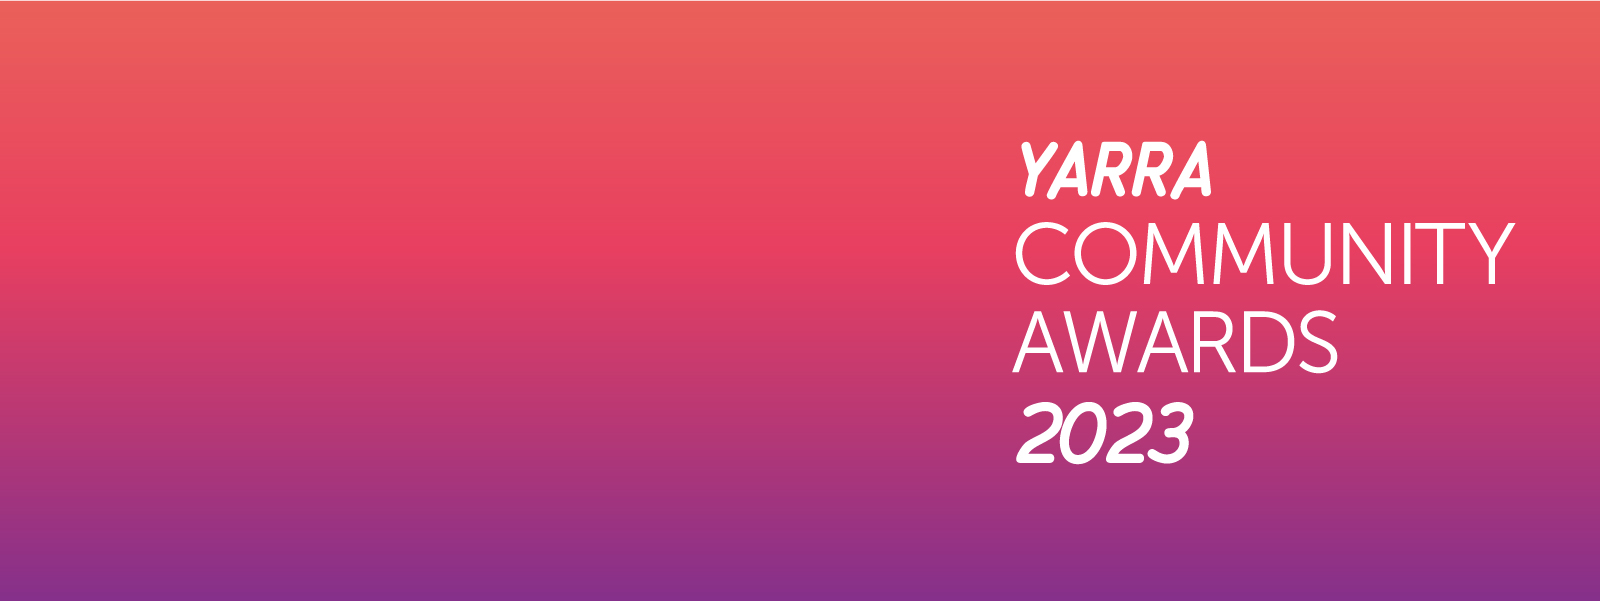 Yarra Community Awards 2023